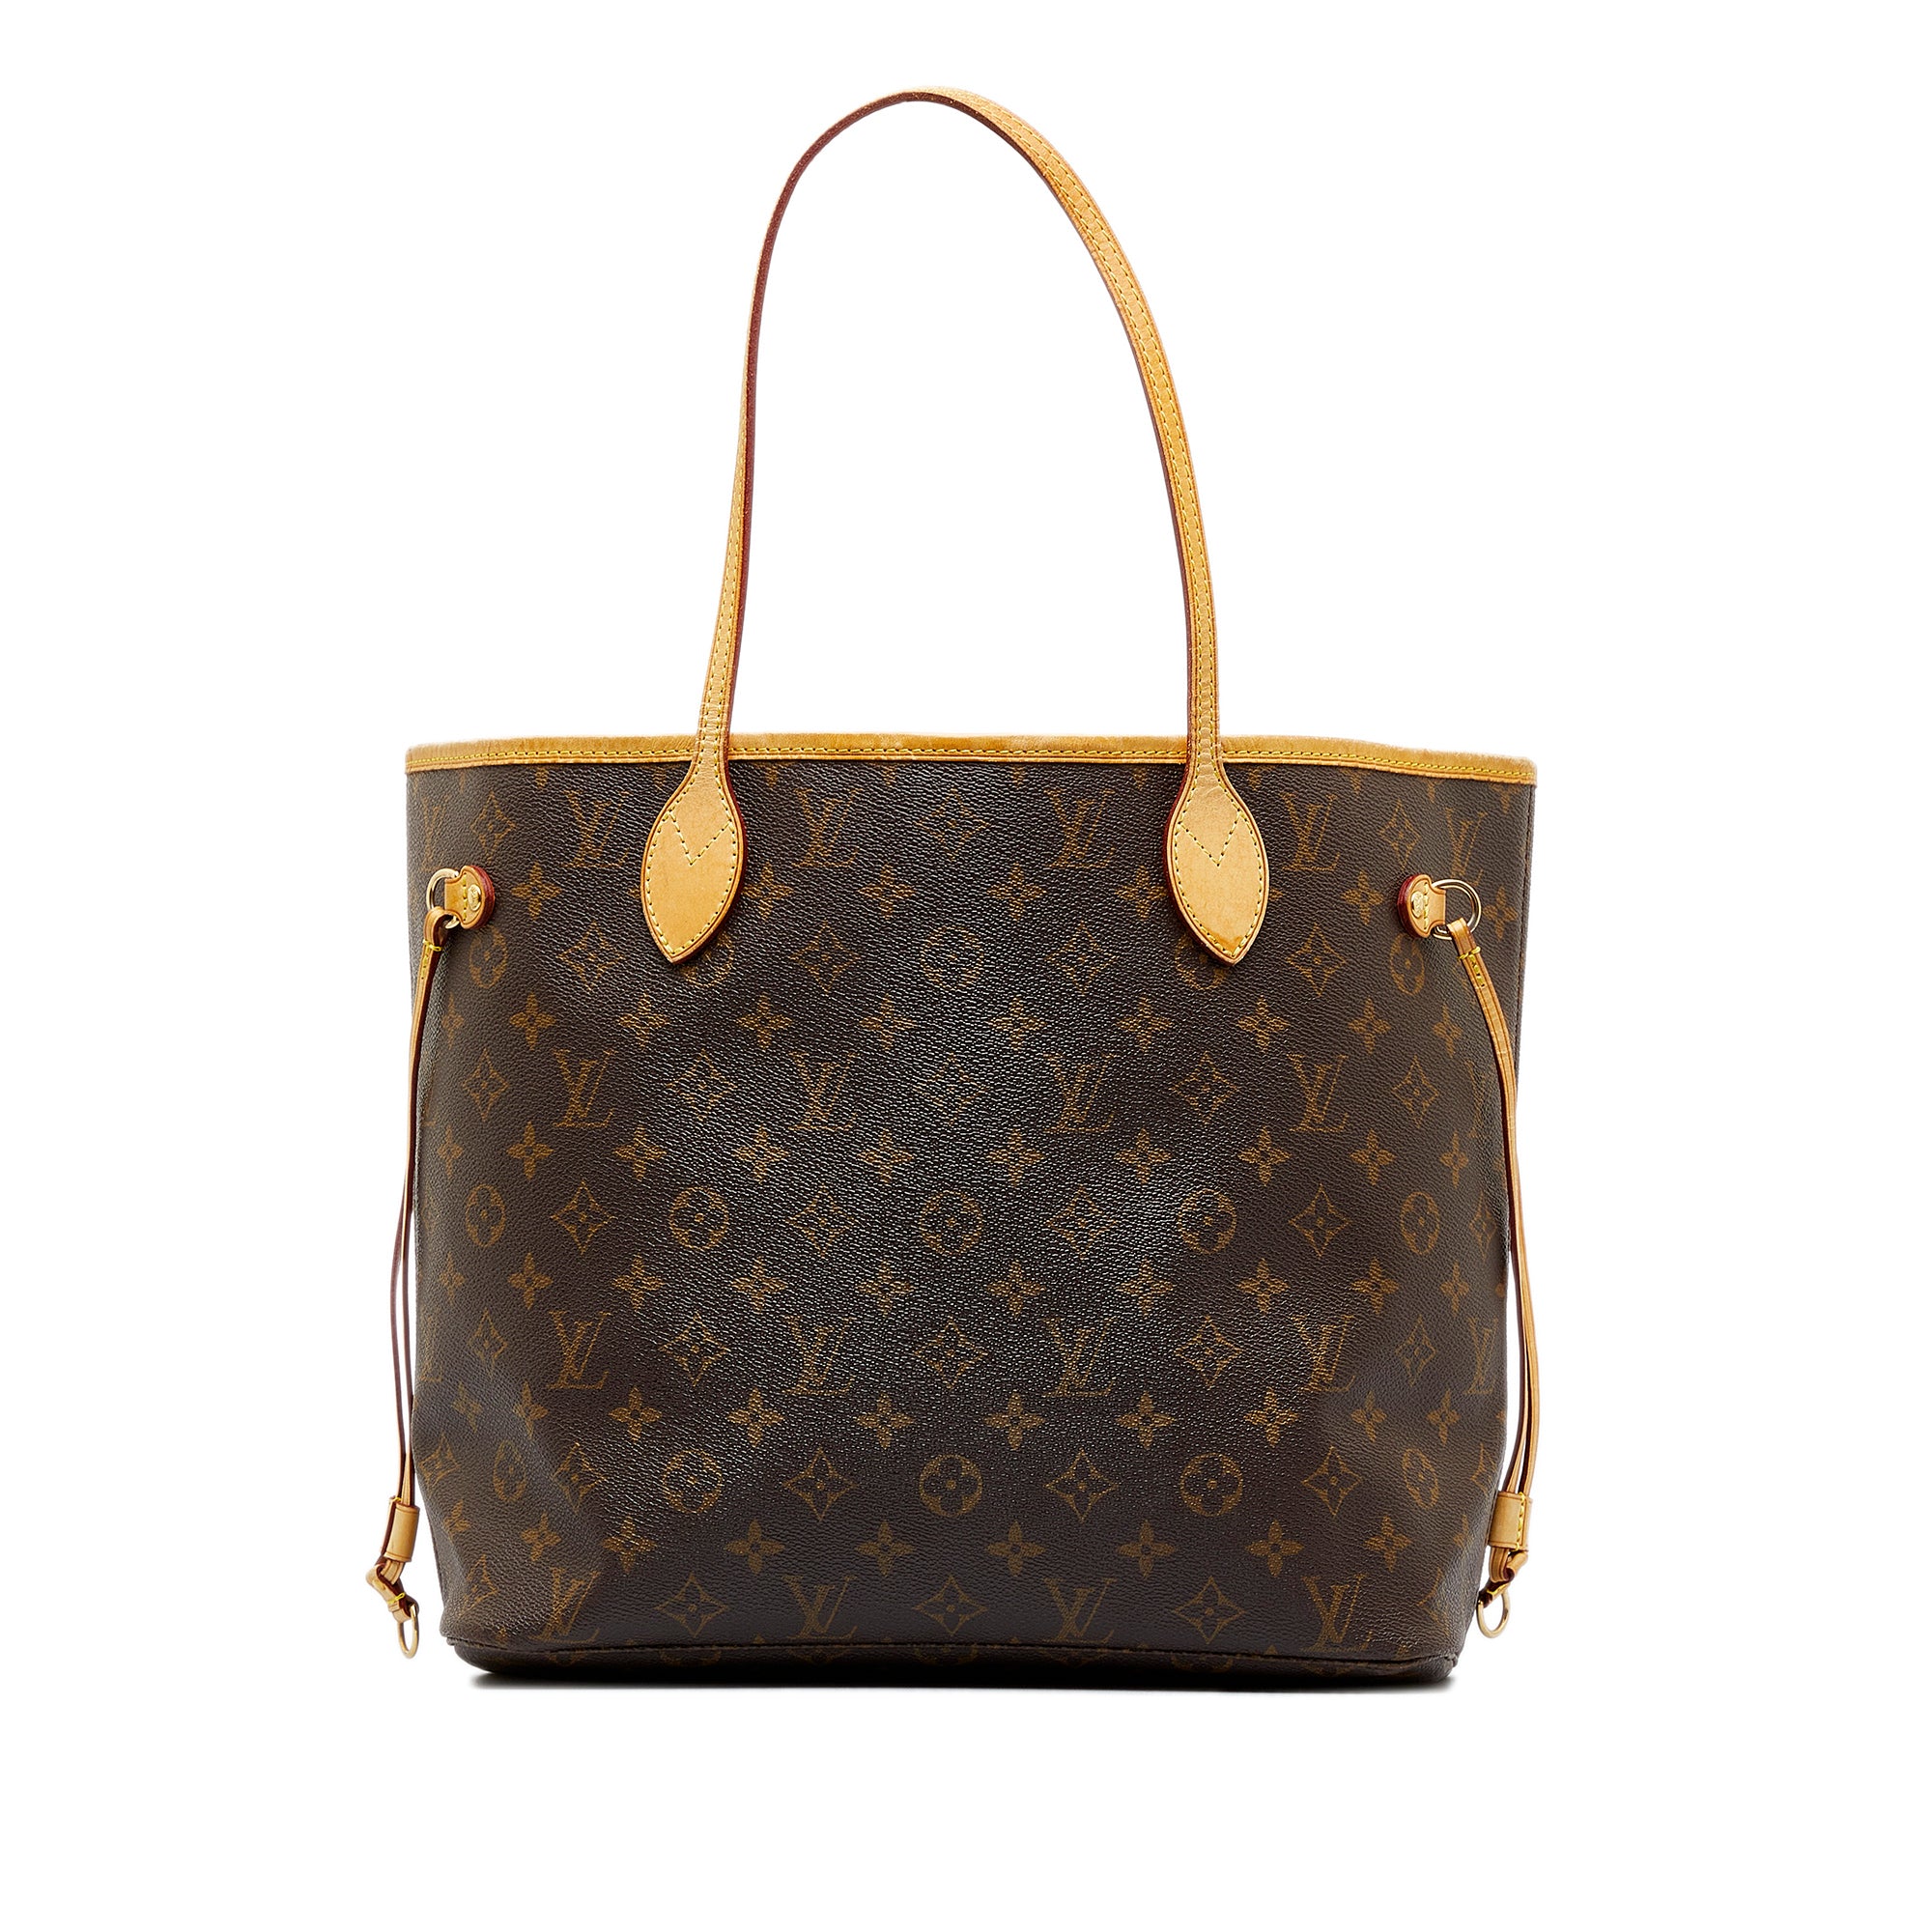 Louis Vuitton Neverfull MM, Bags